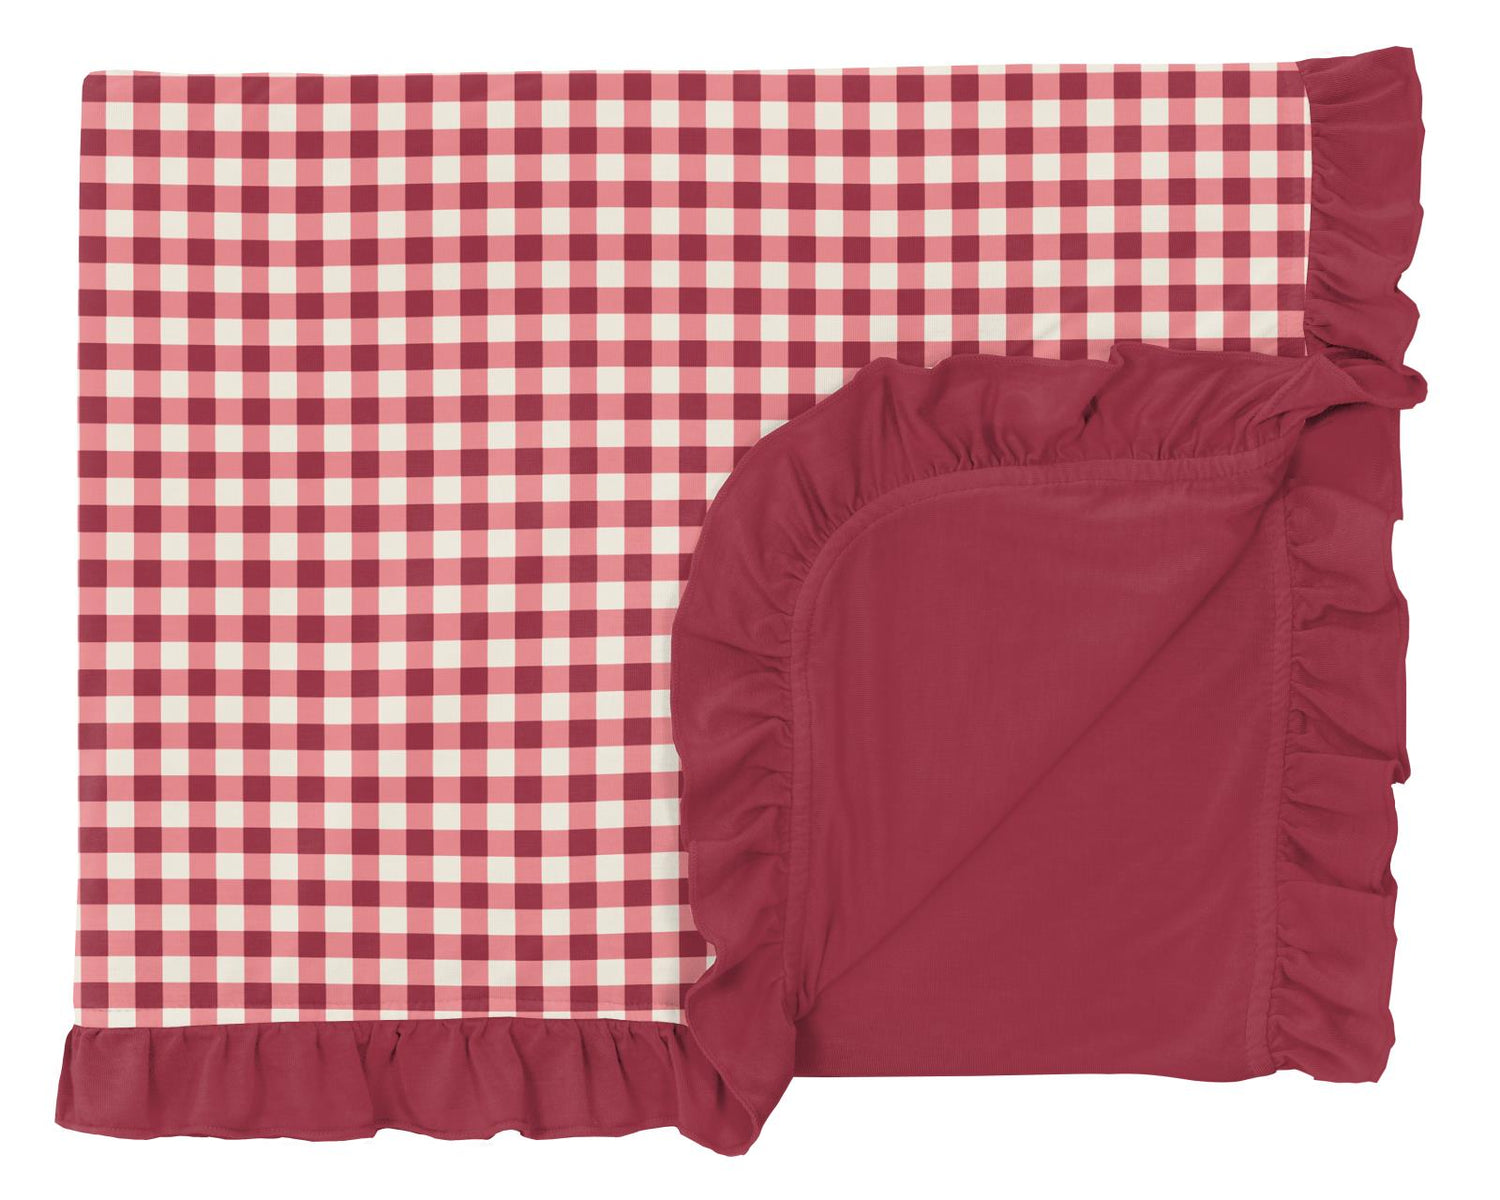 Print Ruffle Toddler Blanket in Wild Strawberry Gingham